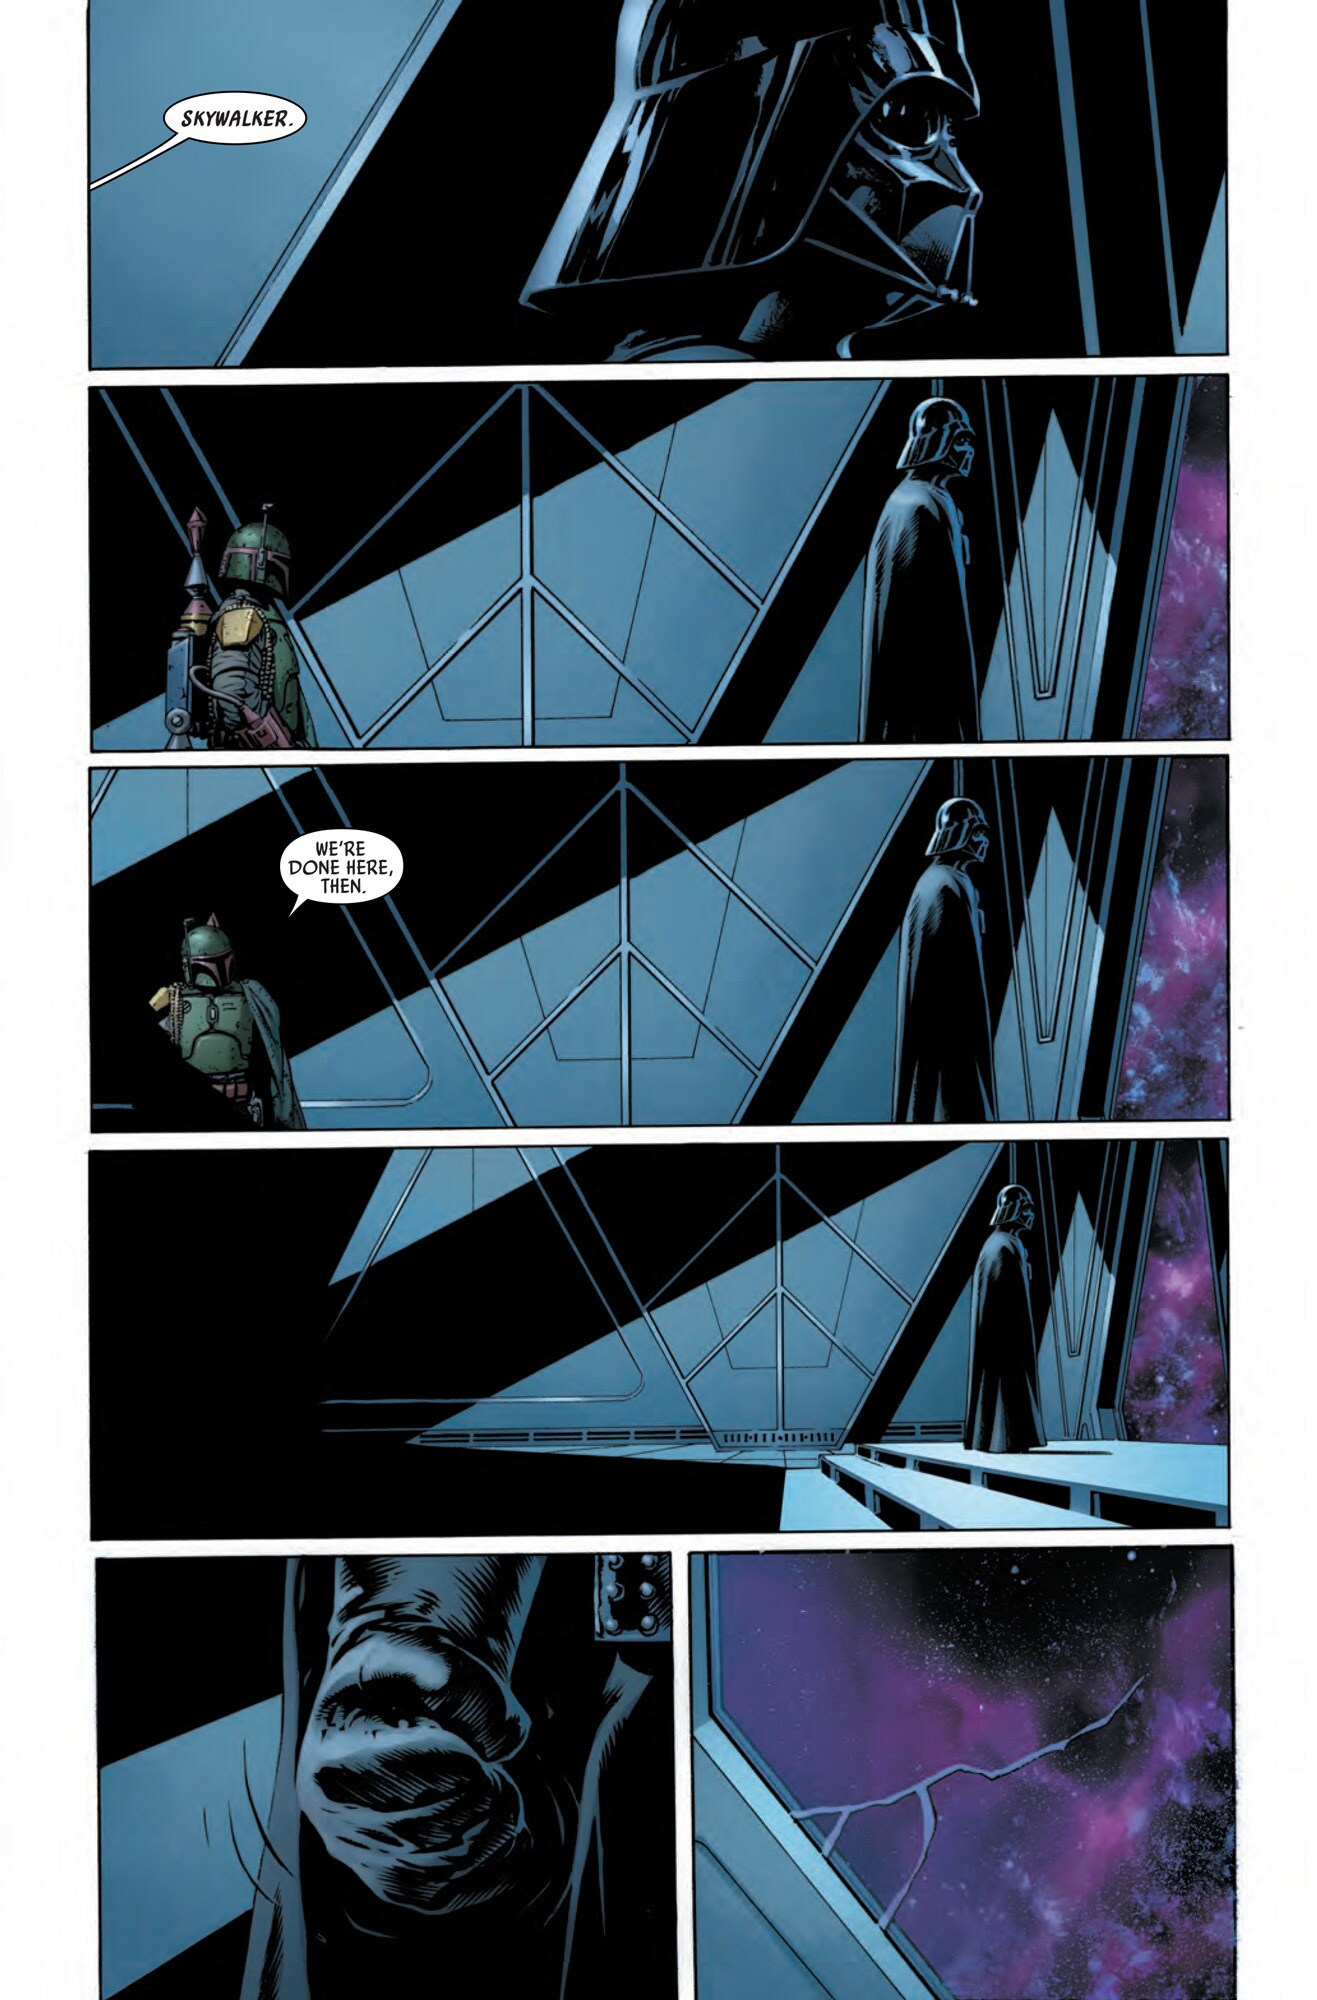 Star Wars #6 comic, page 24